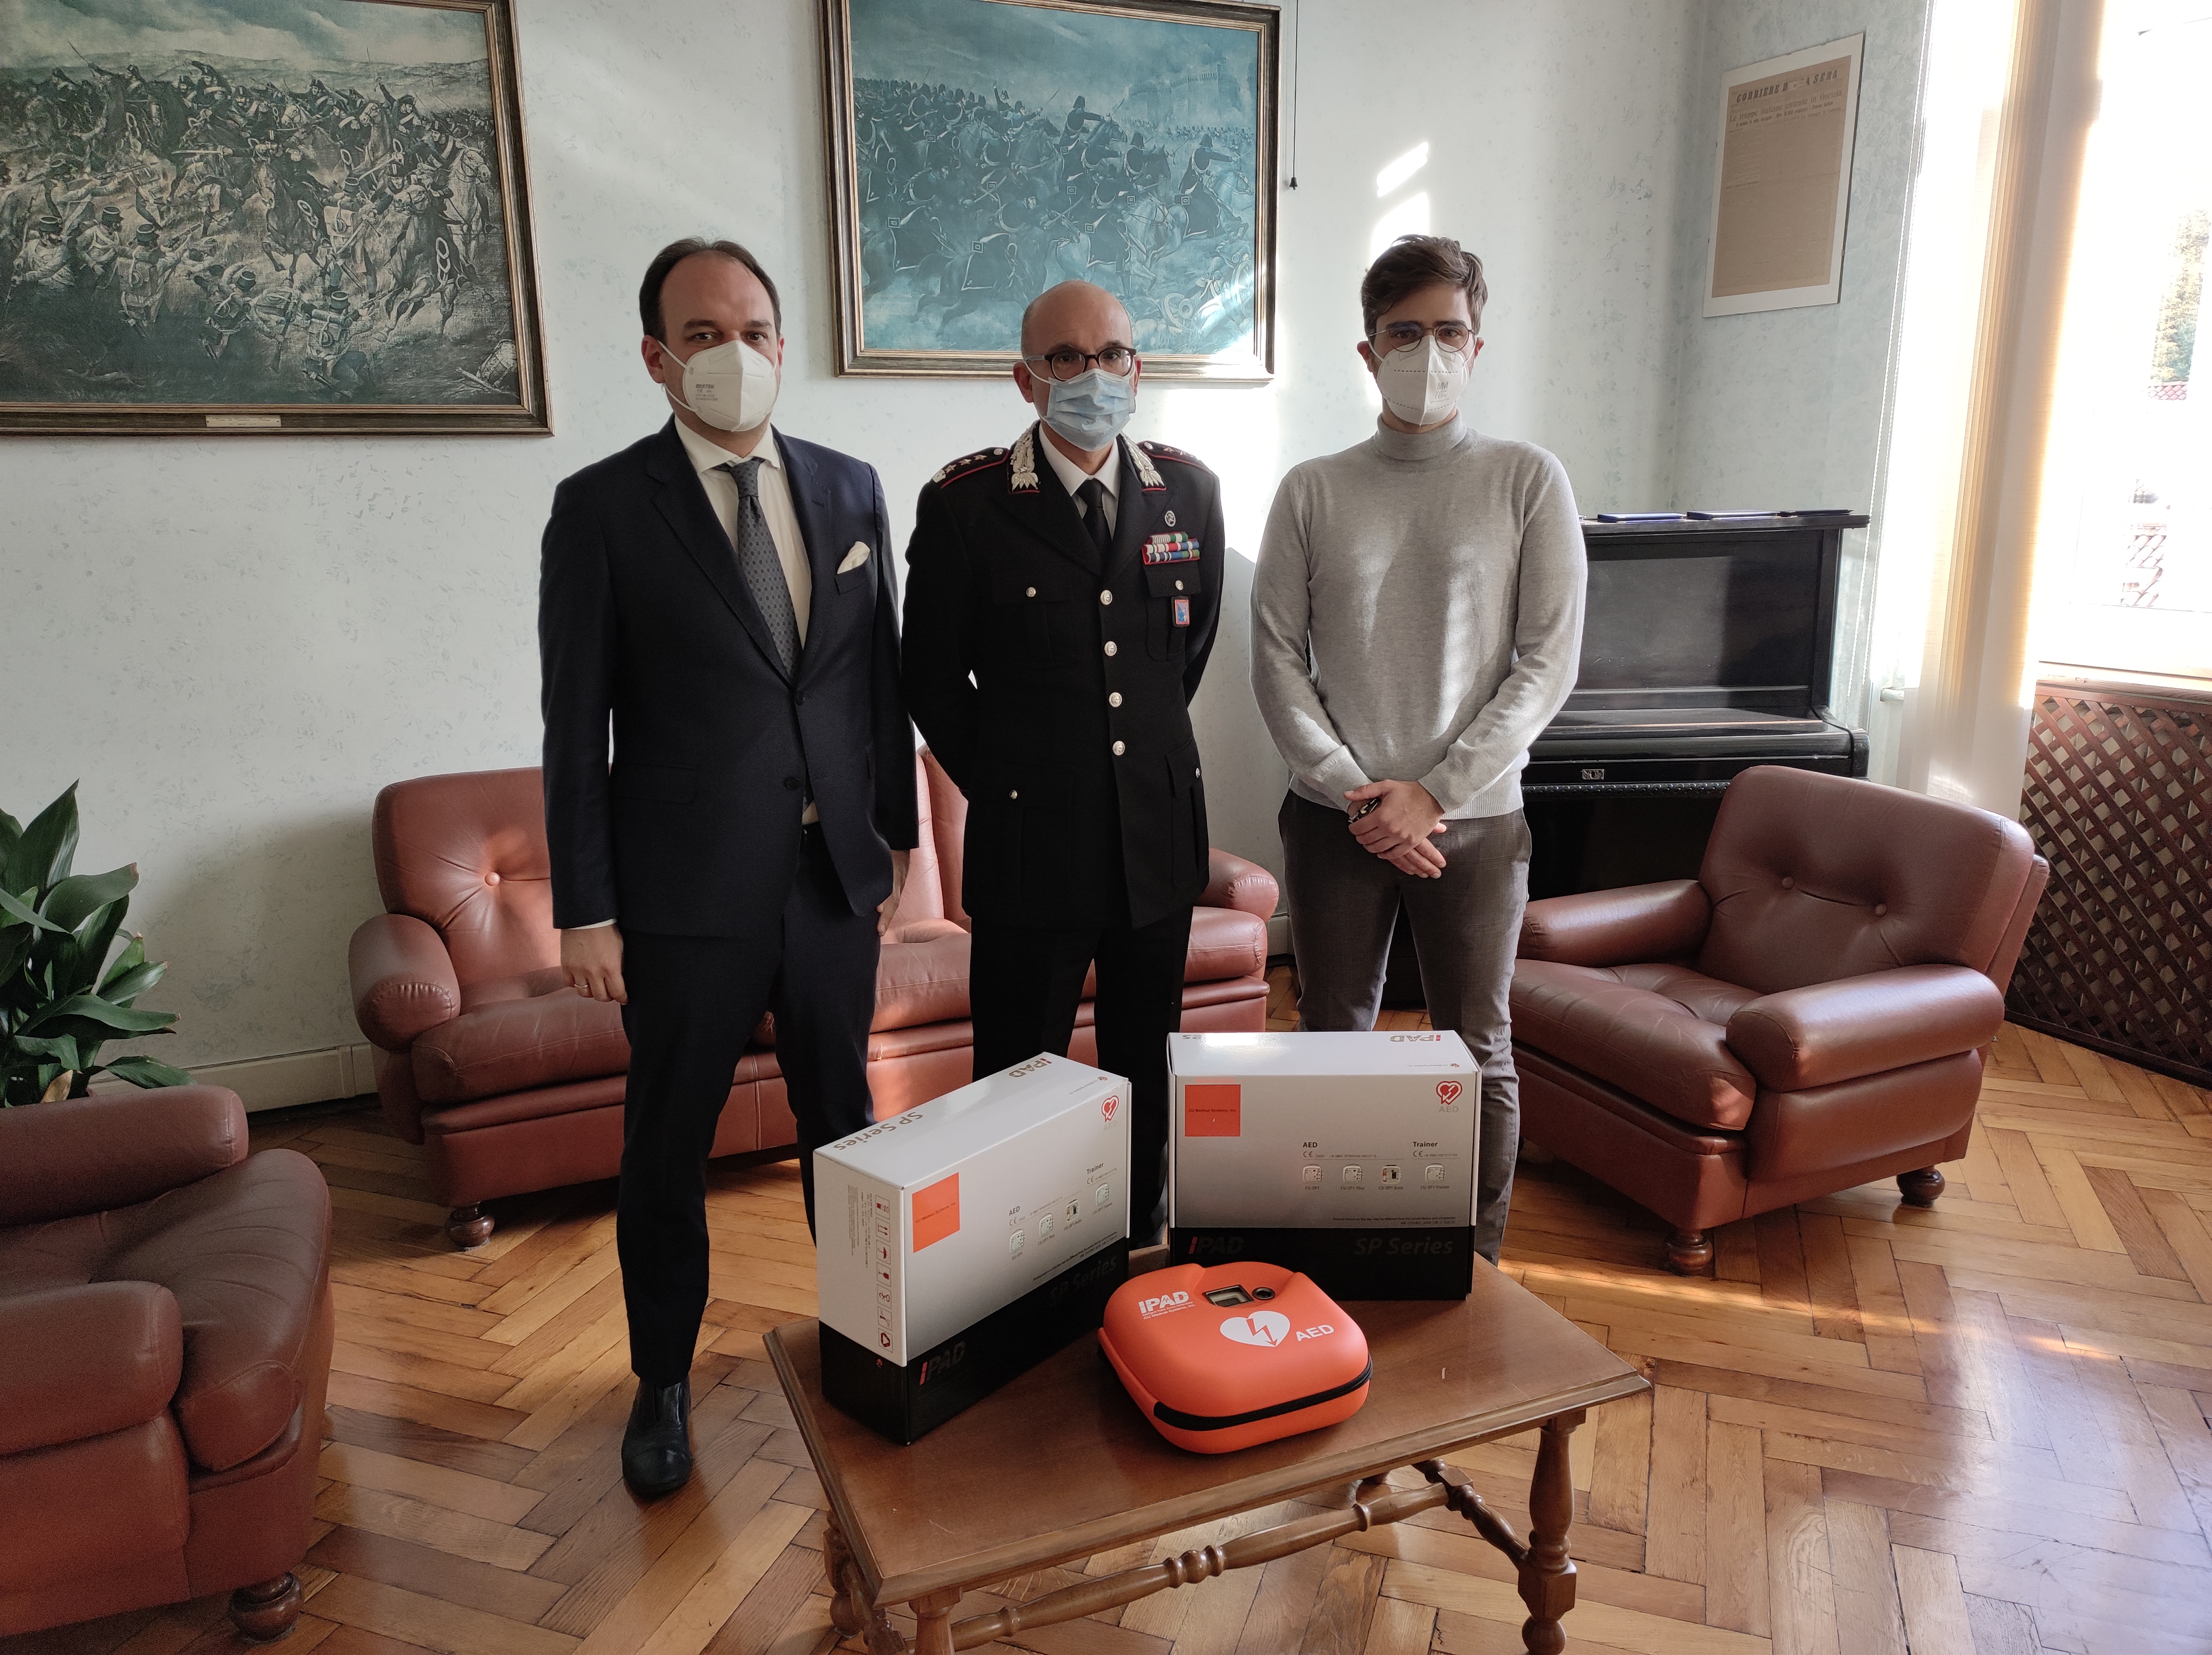 Caserme più sicure, donati due defibrillatori ai carabinieri di Gorizia